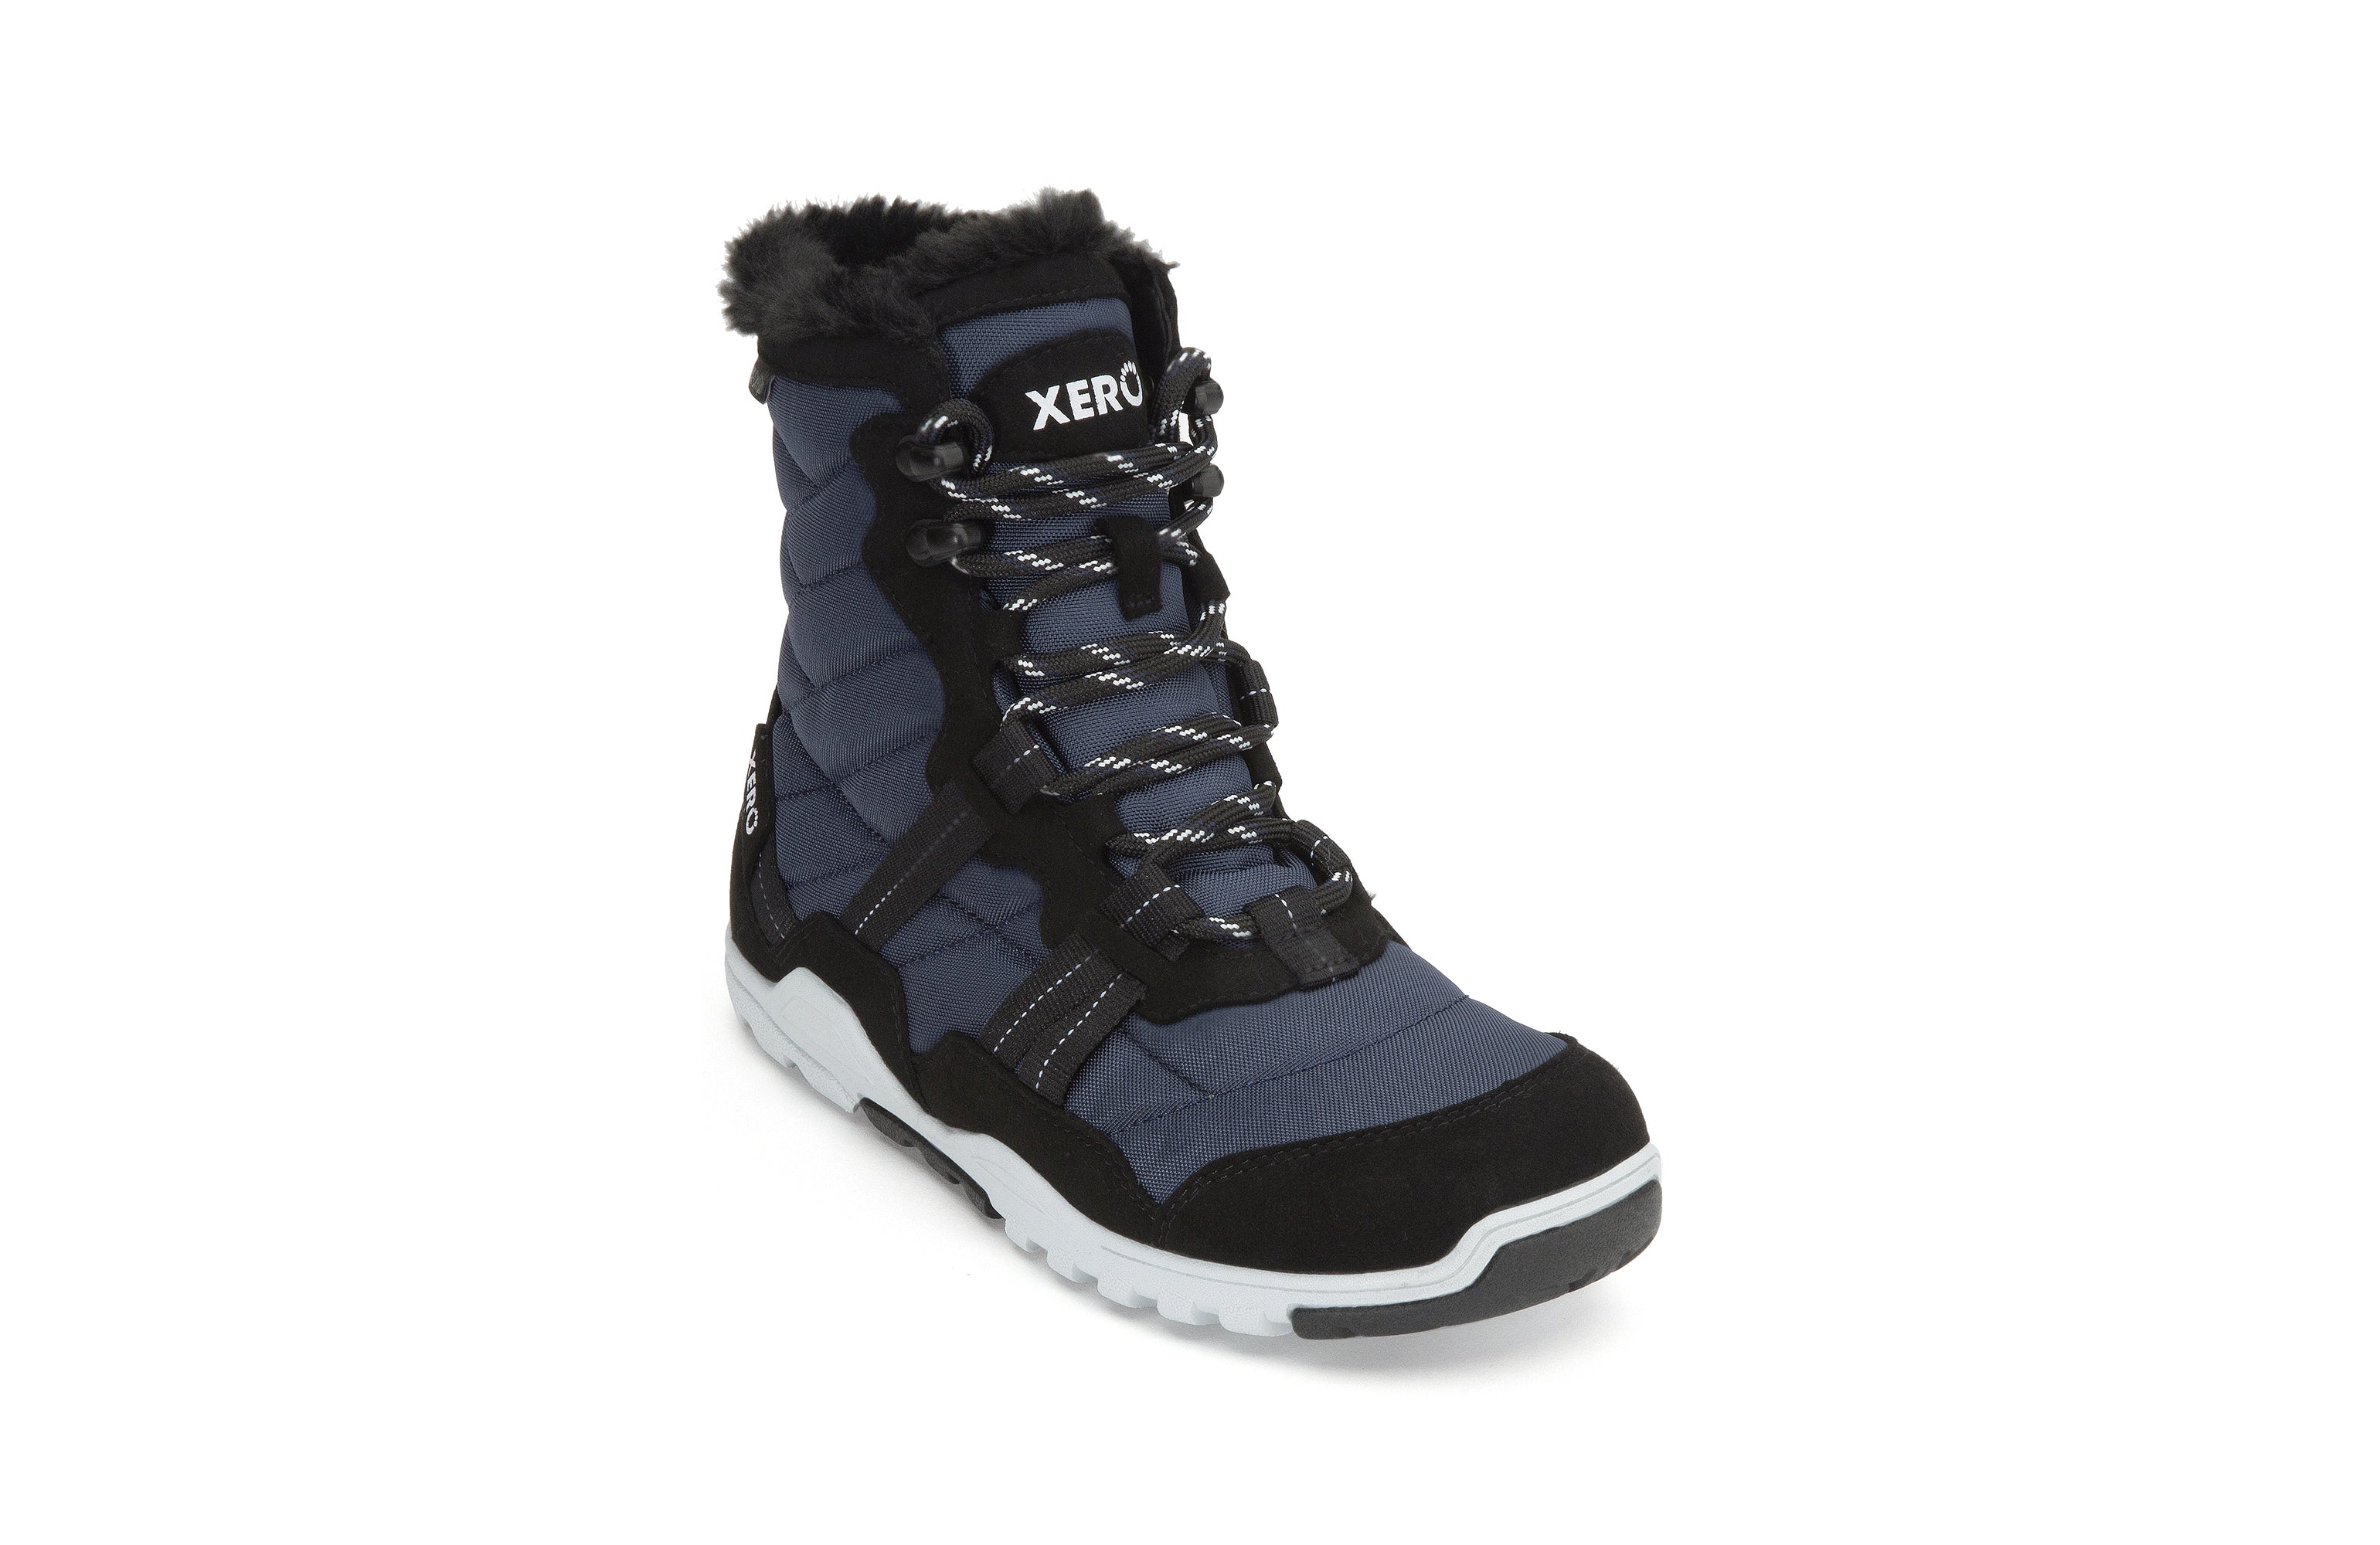 Xero Shoes Alpine Womens barfods vinterstøvler til kvinder i farven navy / black, vinklet